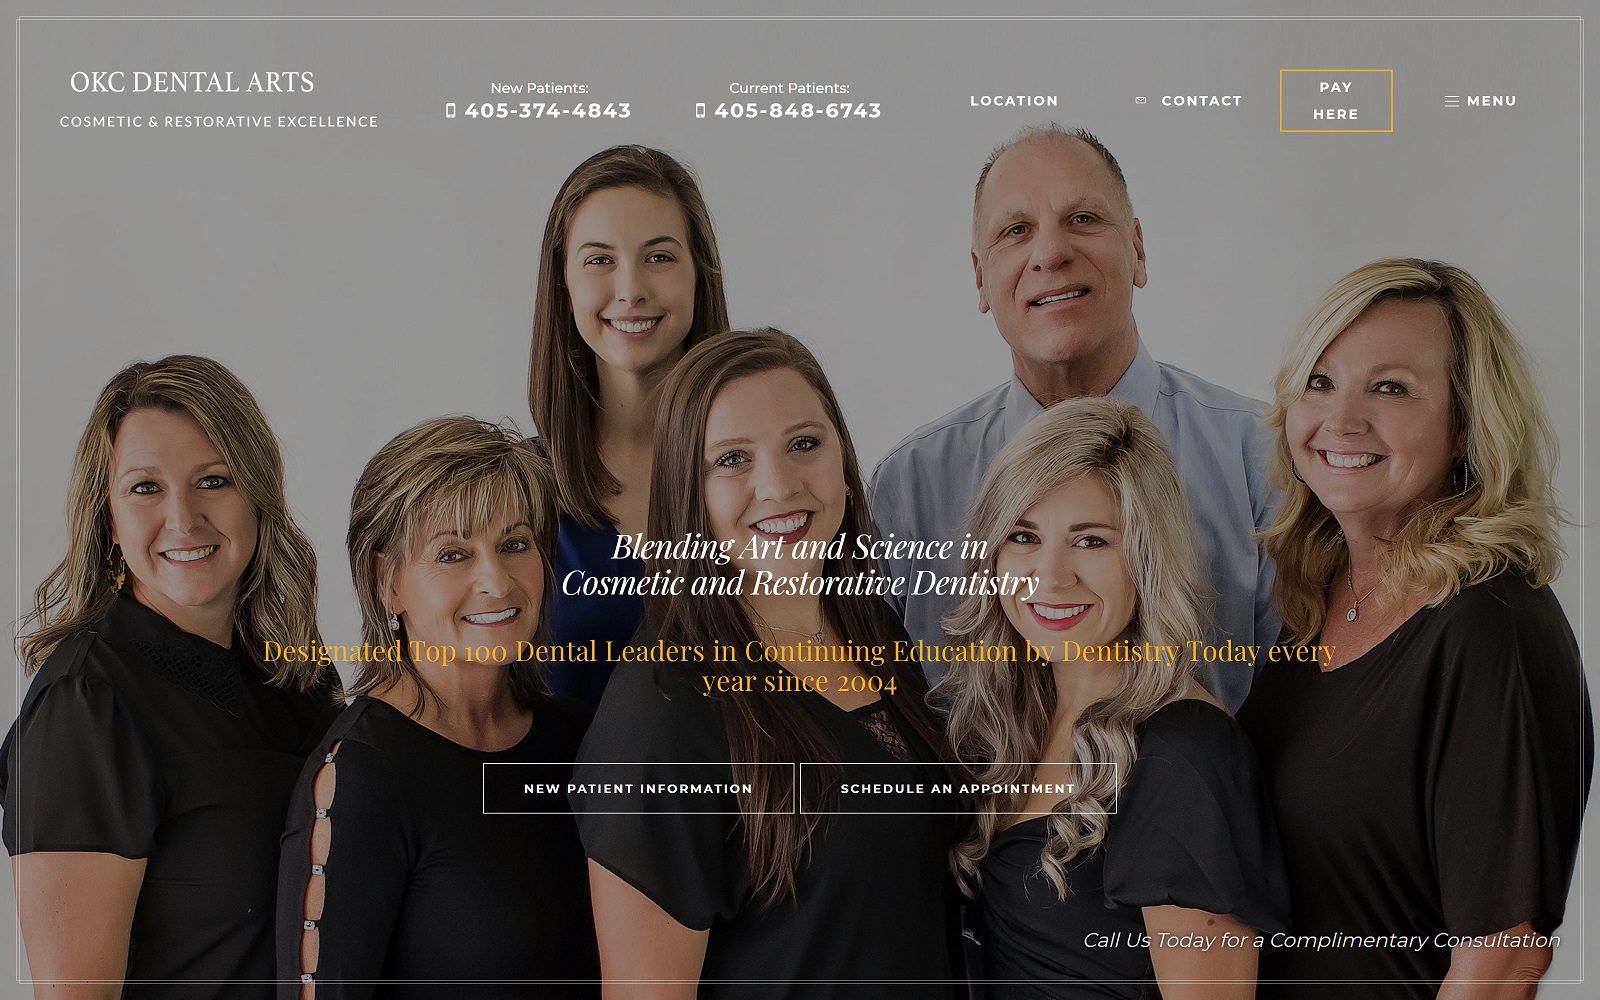 The Screenshot of OKC Dental Arts Website